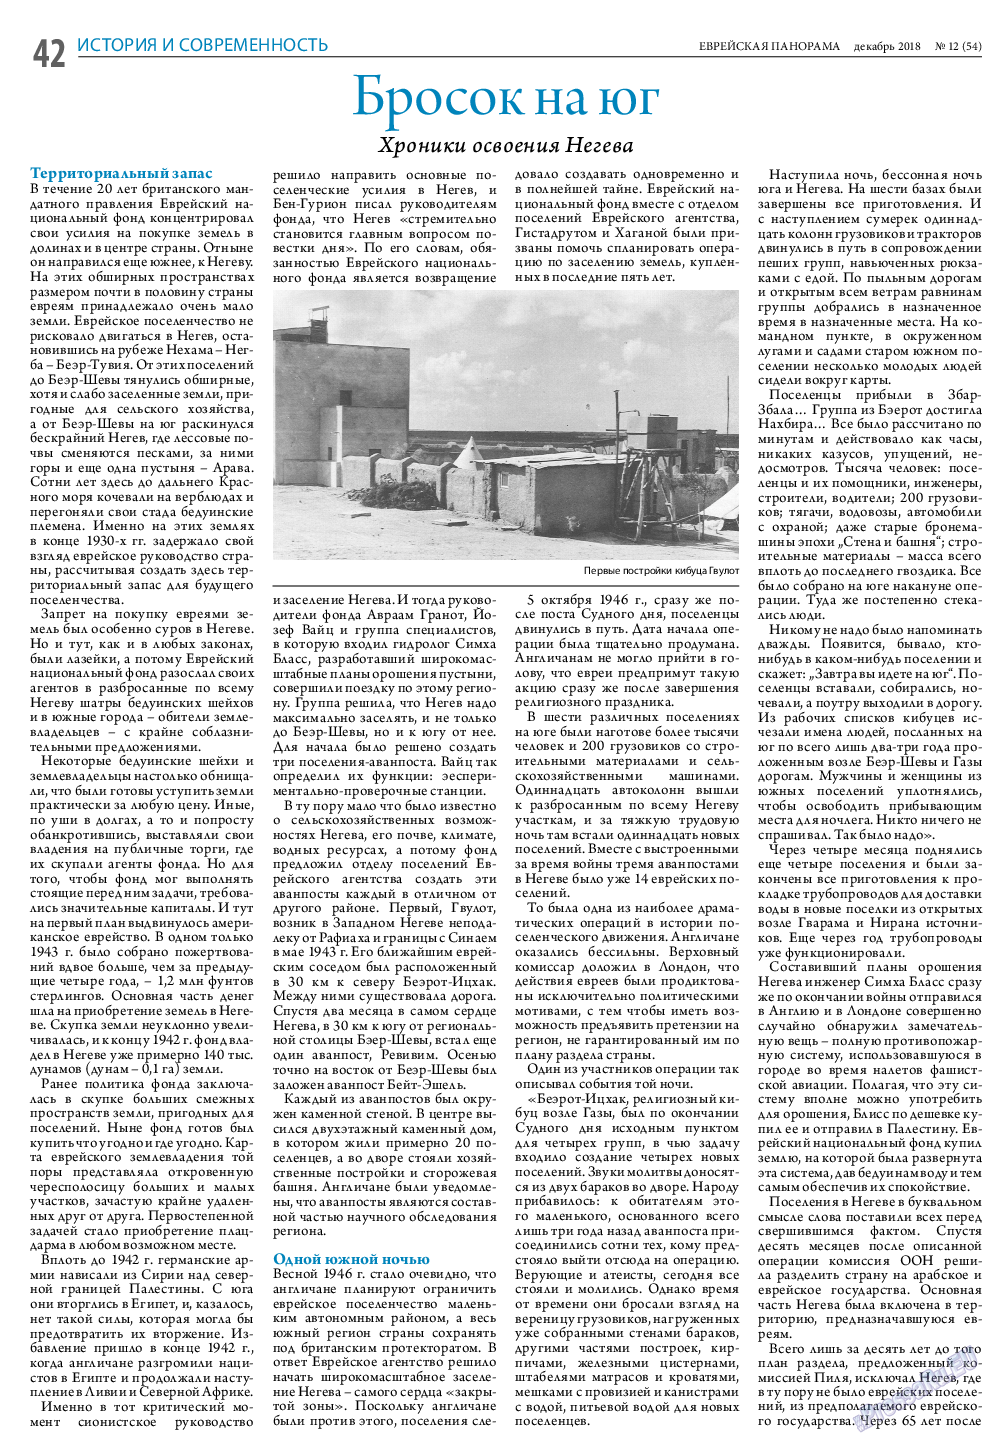 Еврейская панорама, газета. 2018 №12 стр.42